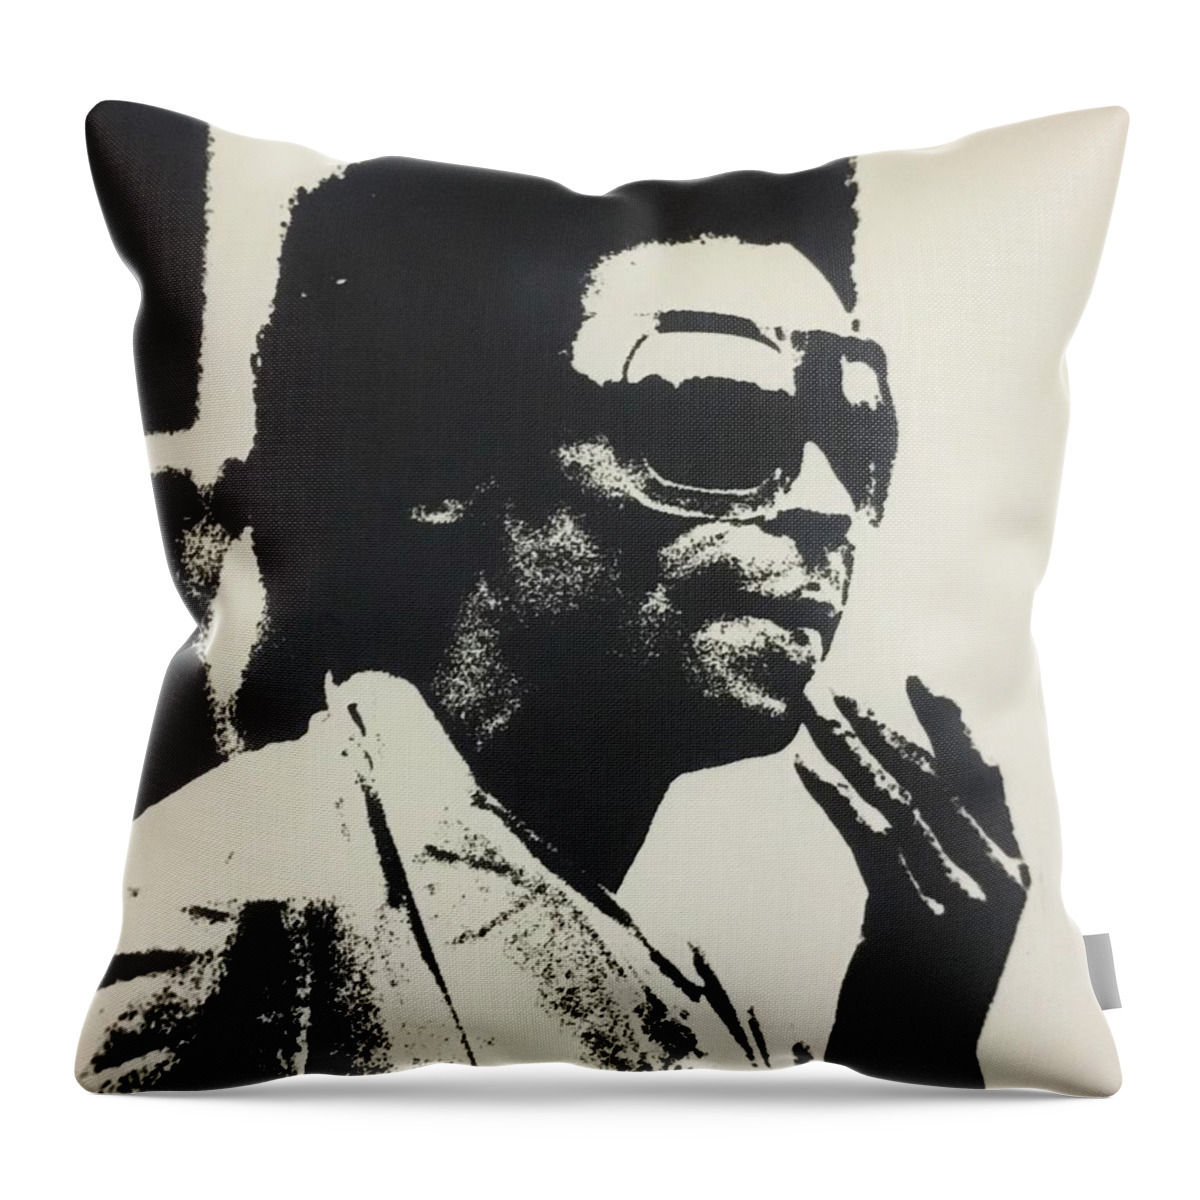 Miles Davis Throw Pillow featuring the photograph El Maestro Miles Davis by Ricardo Penalver deceased